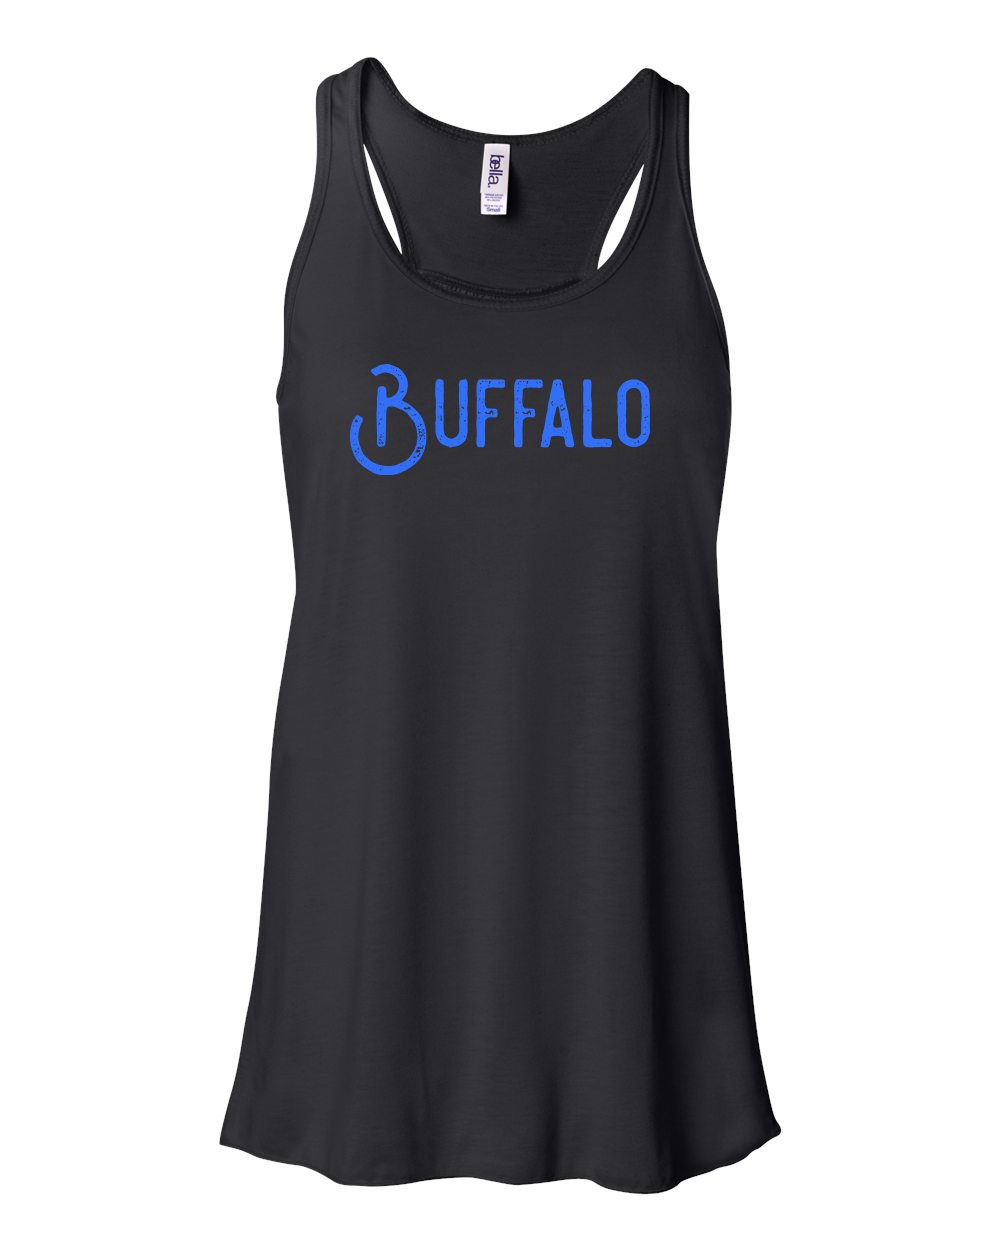 Image of "Buffalo" Ladies Tank - Black